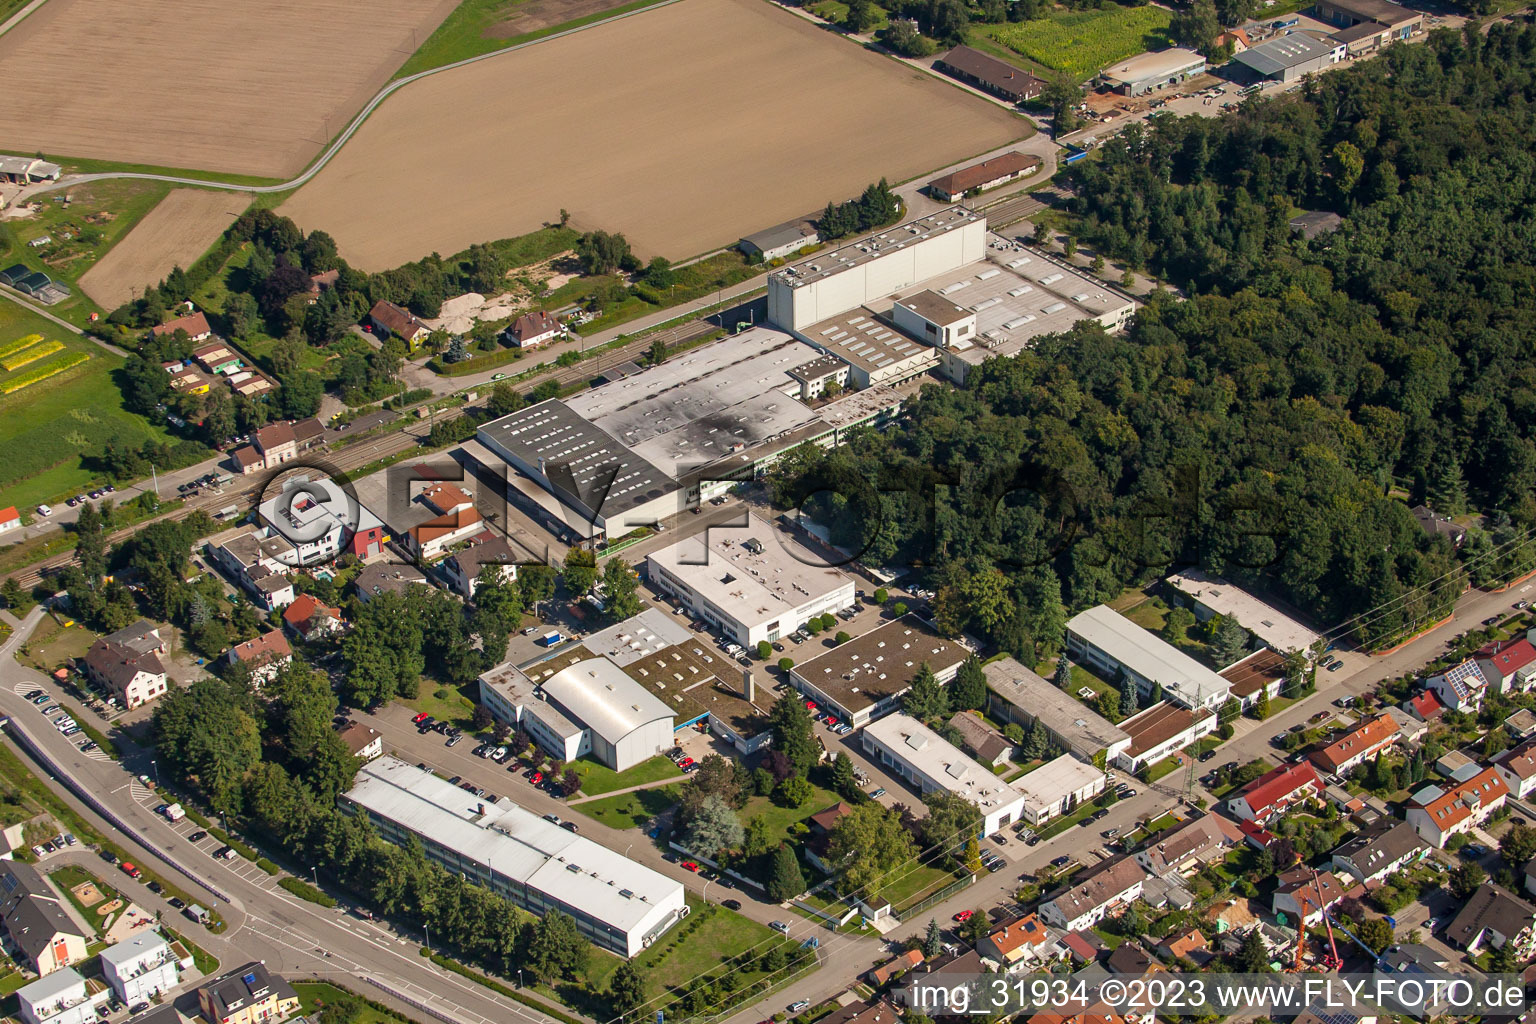 Vue aérienne de Zone commerciale Akazienweg à le quartier Silberstreifen in Rheinstetten dans le département Bade-Wurtemberg, Allemagne